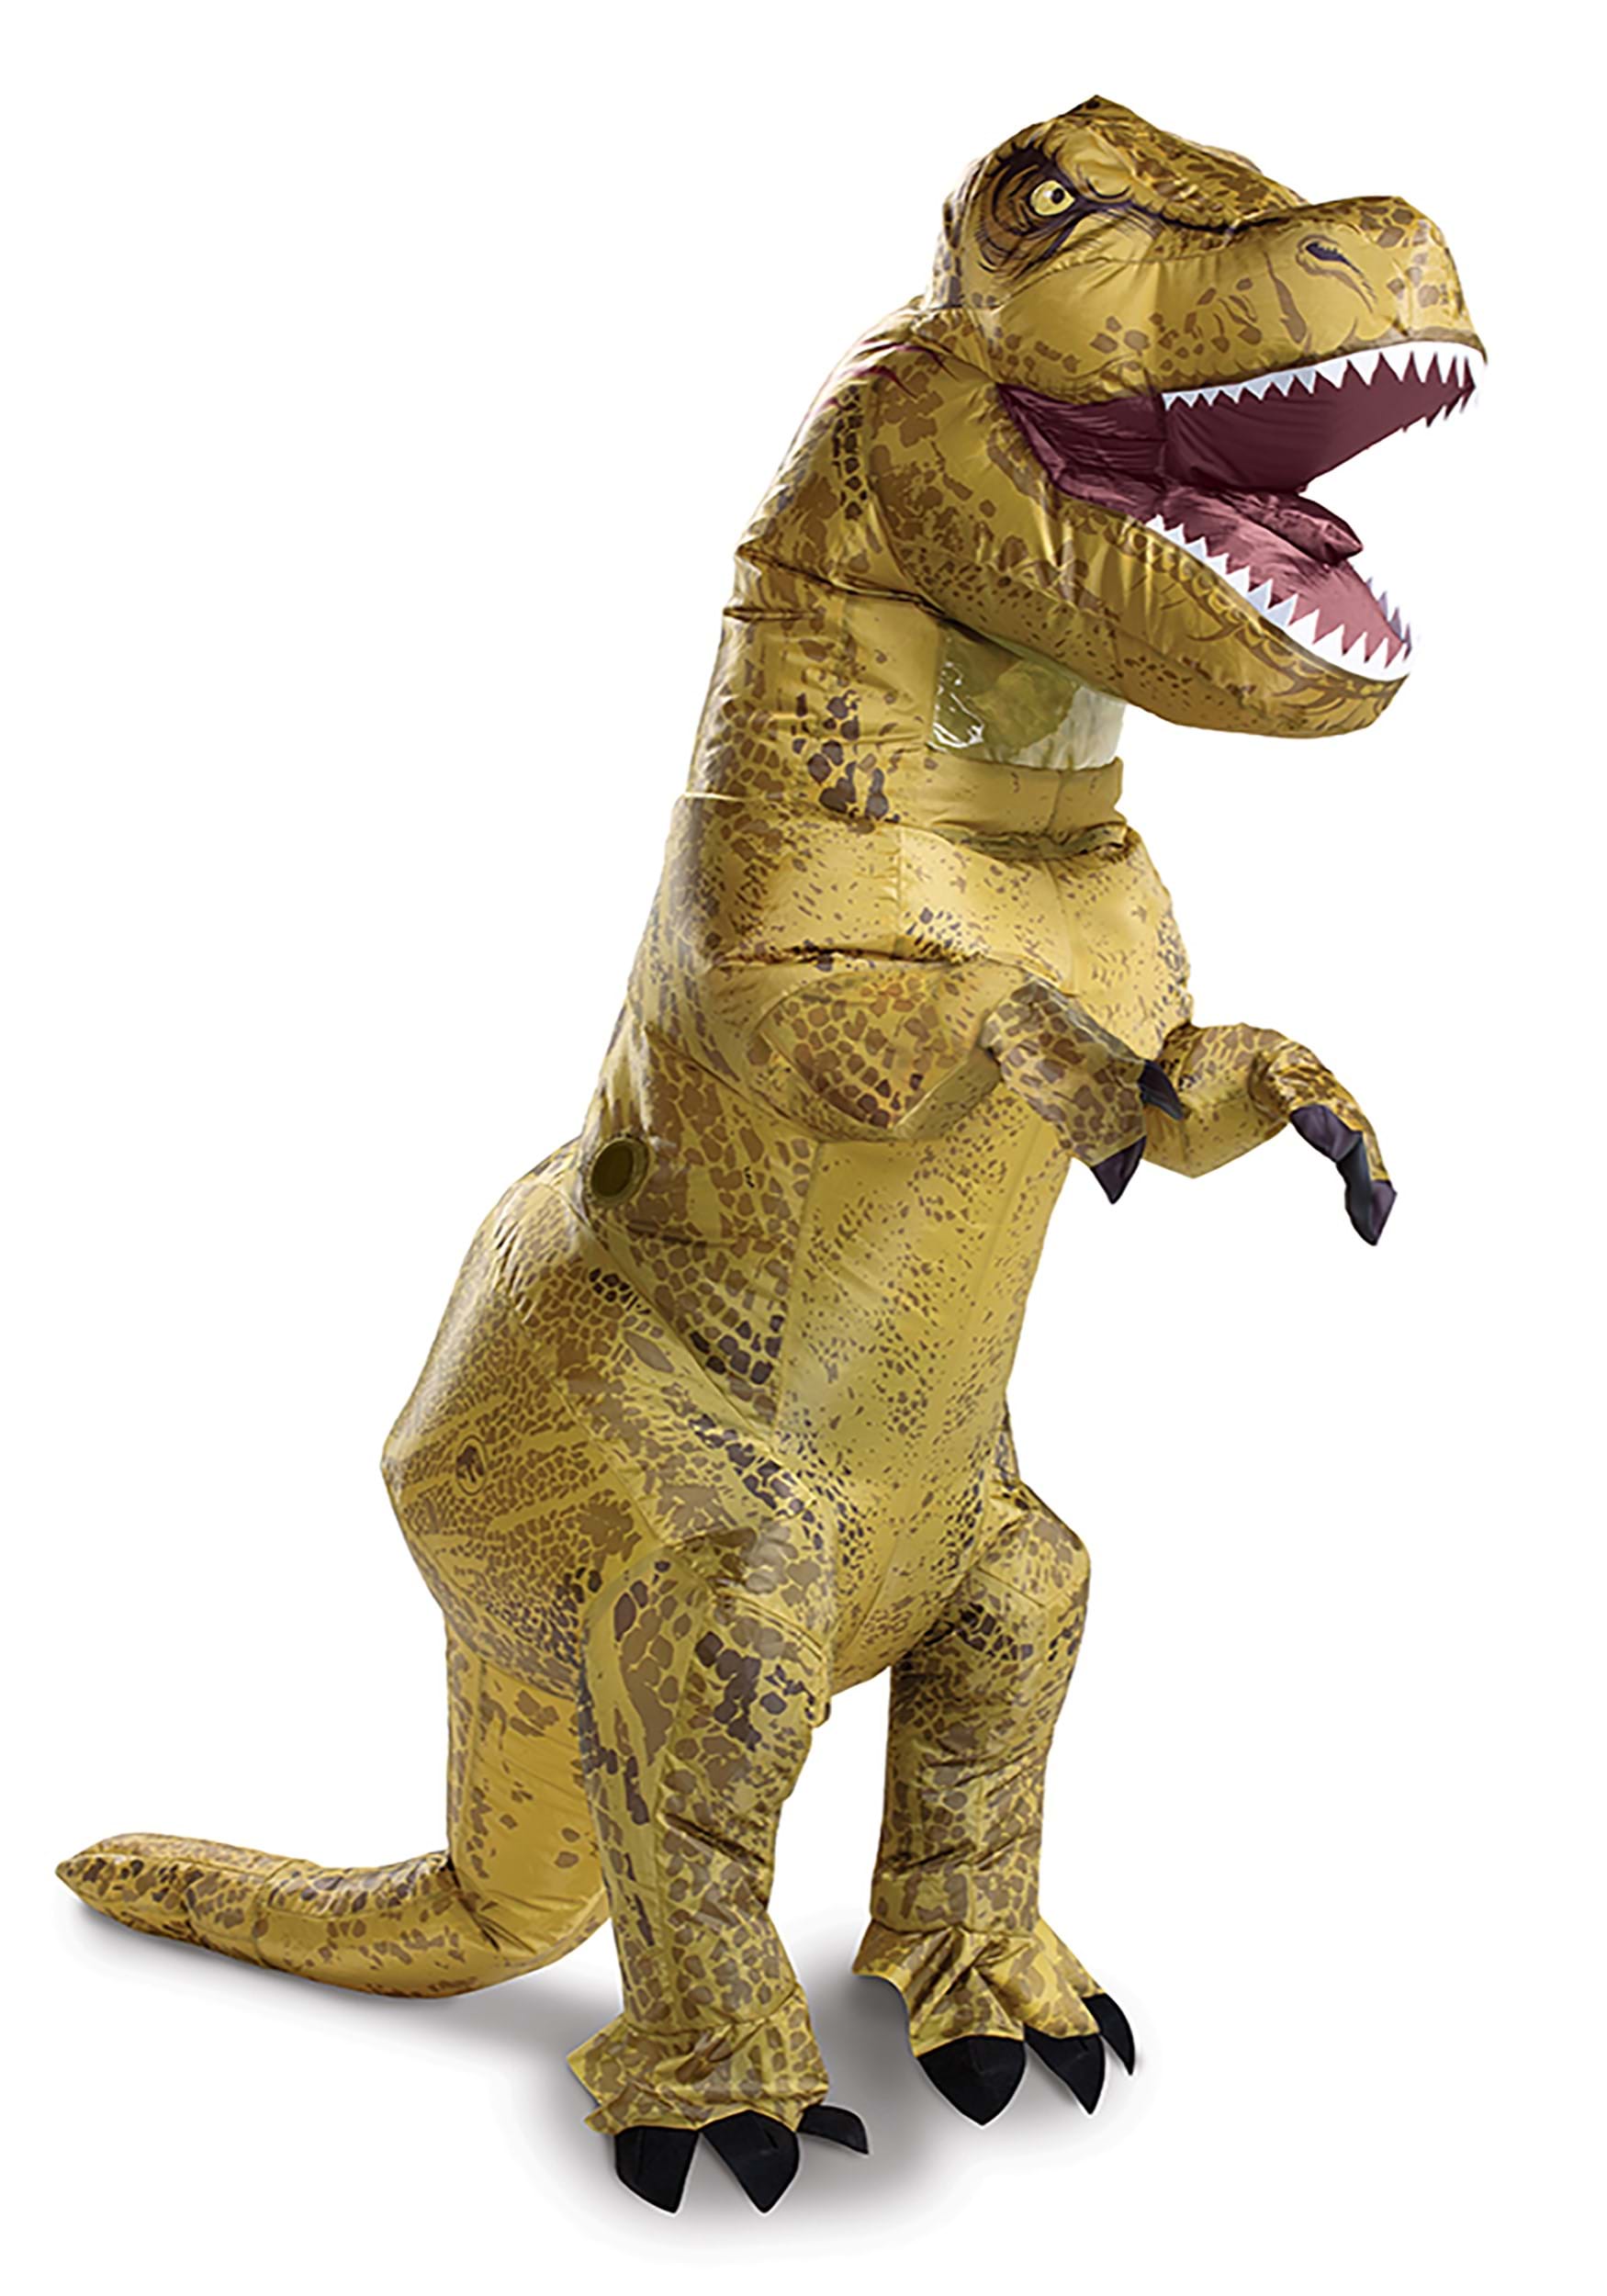 Adult Jurassic World Inflatable T-Rex Costume